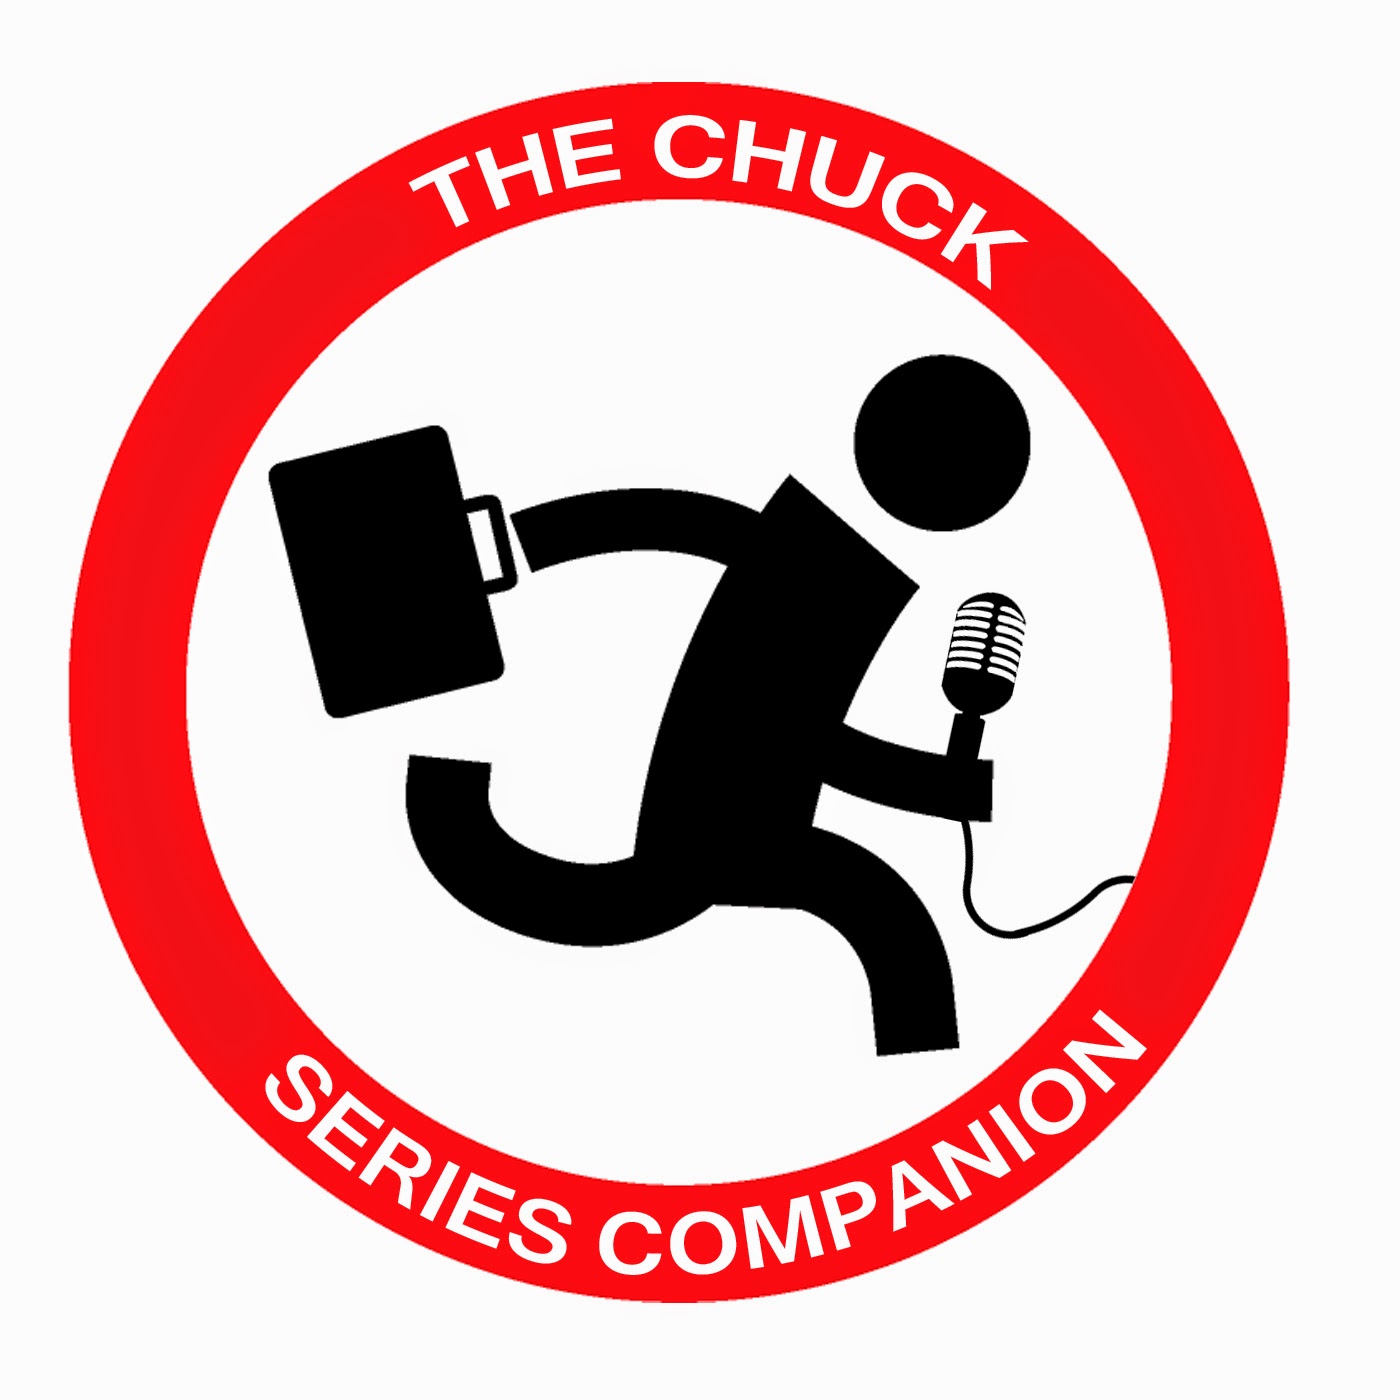 The Chuck Series Companion